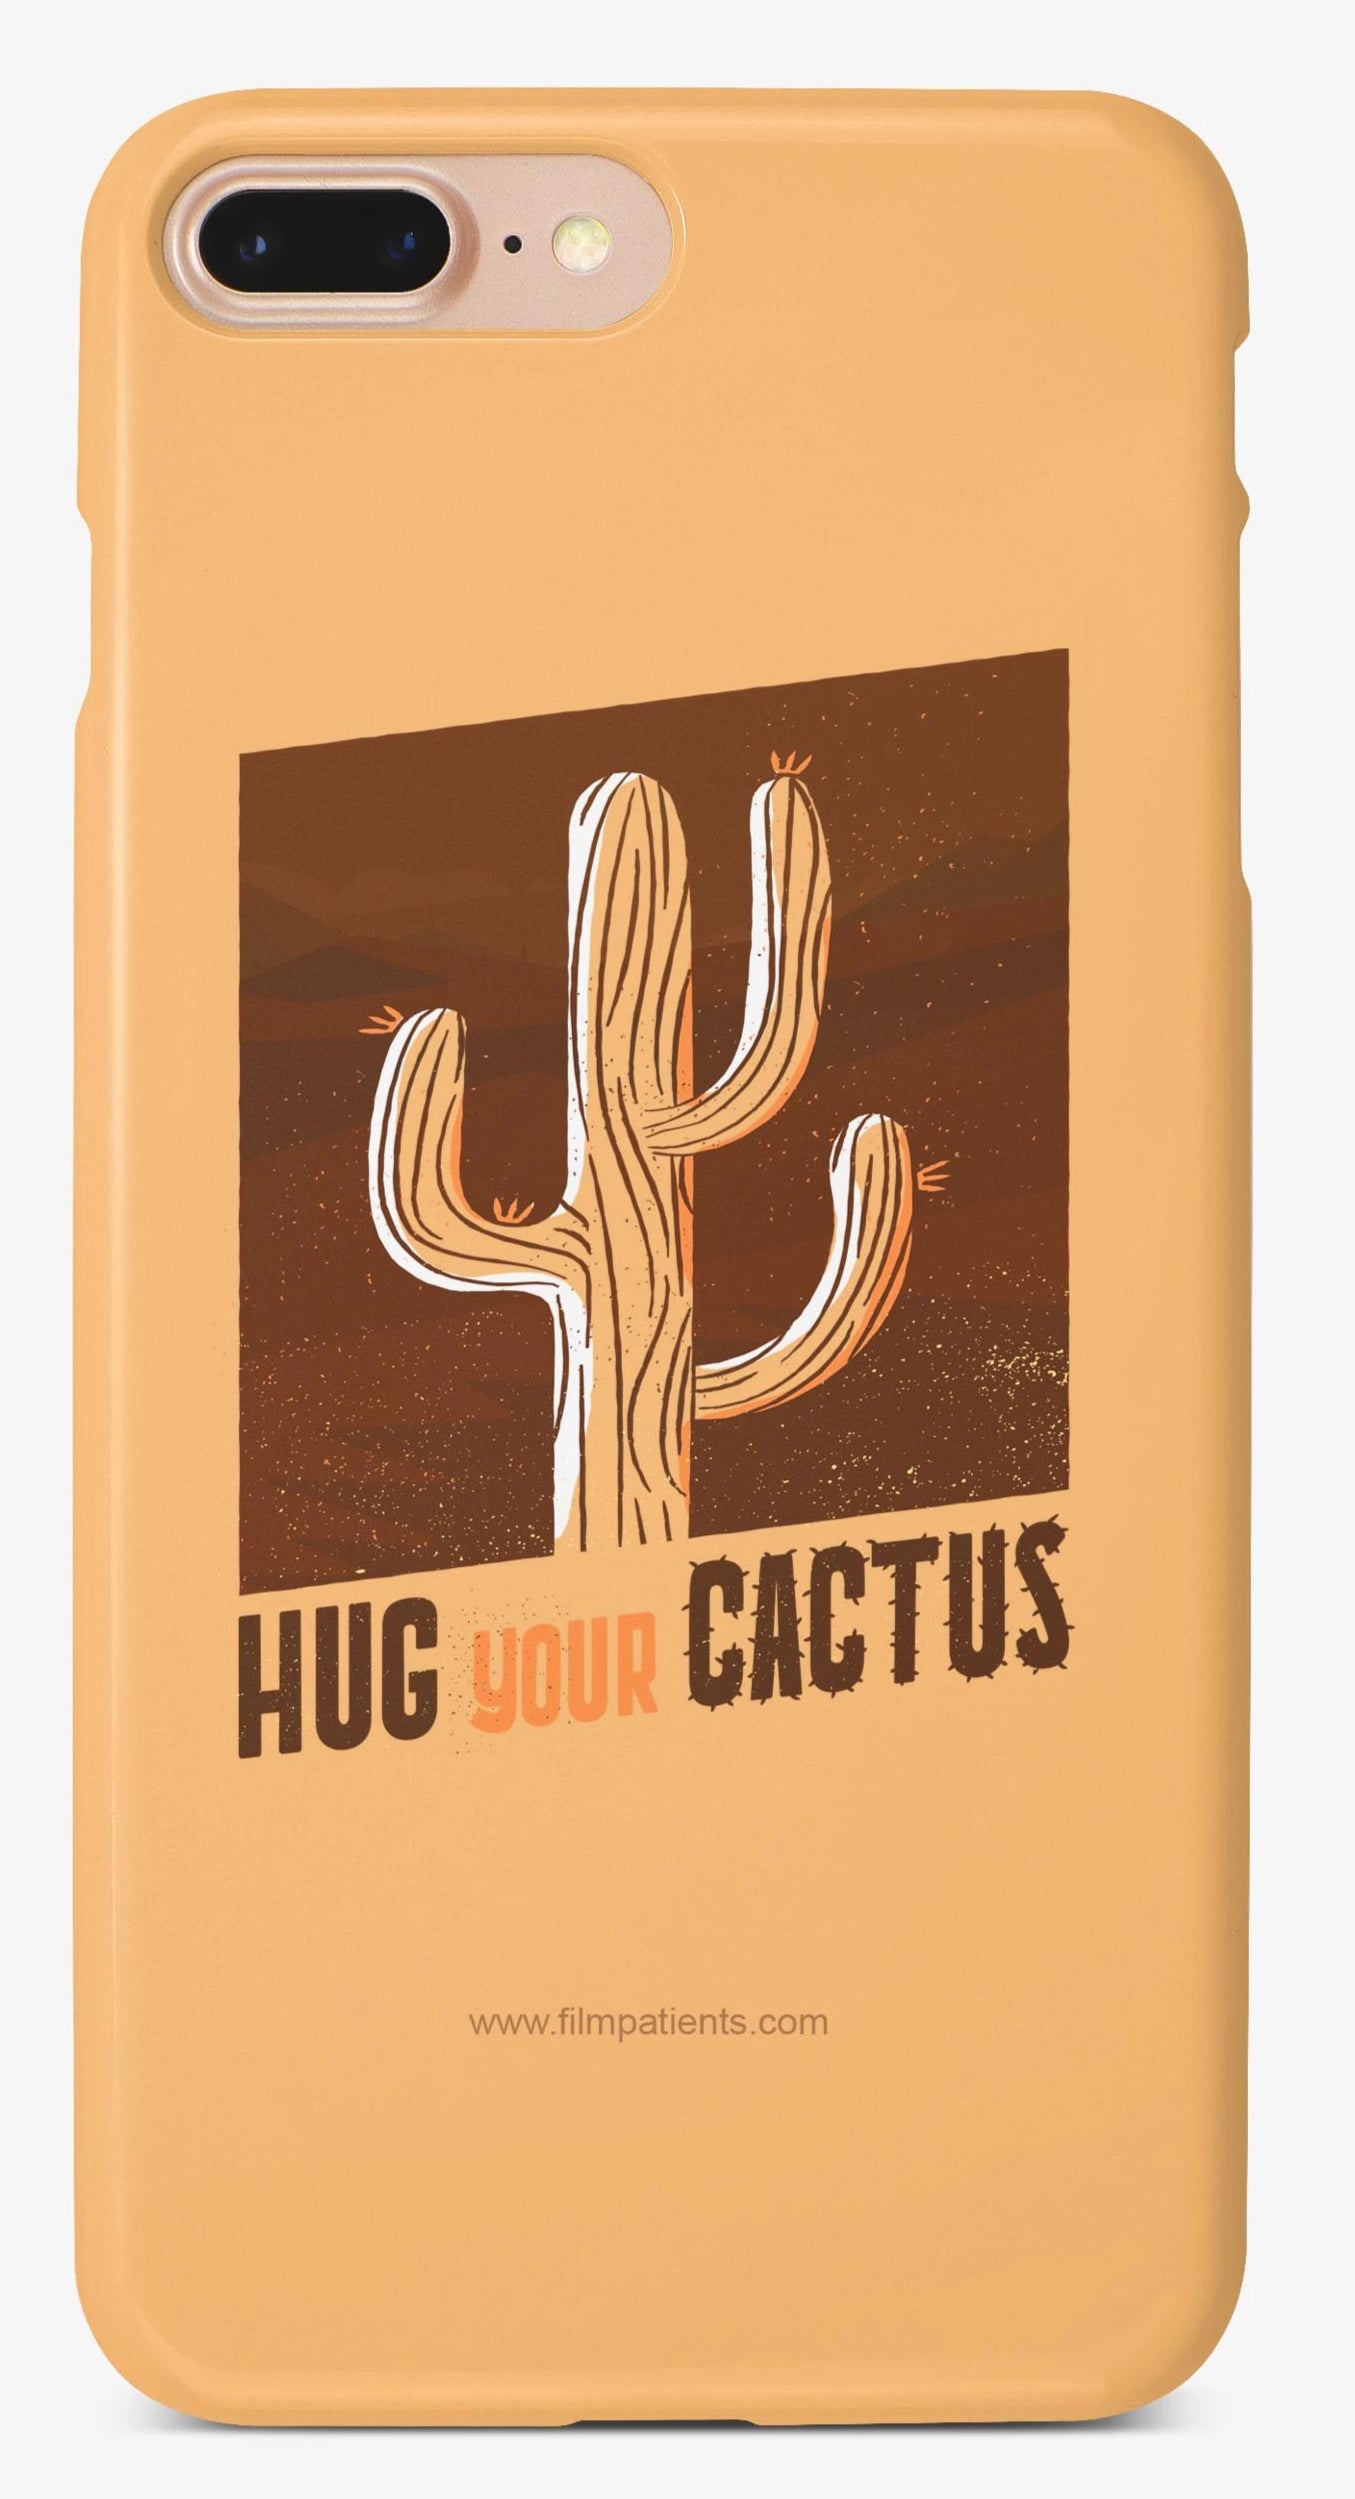 Hug your Cactus